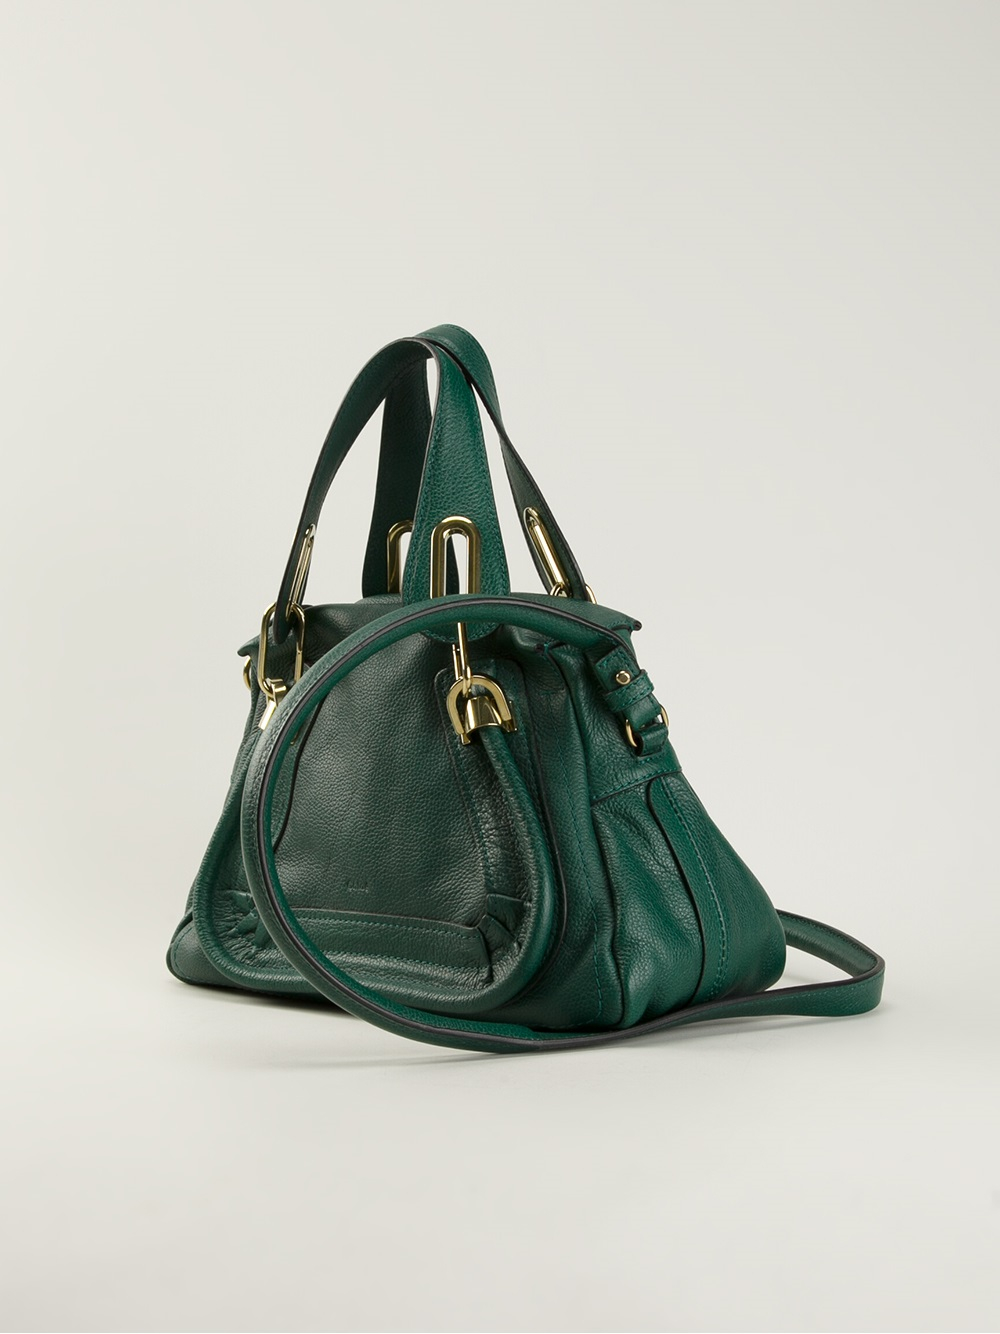 Chloé Paraty Shoulder Bag in Green - Lyst